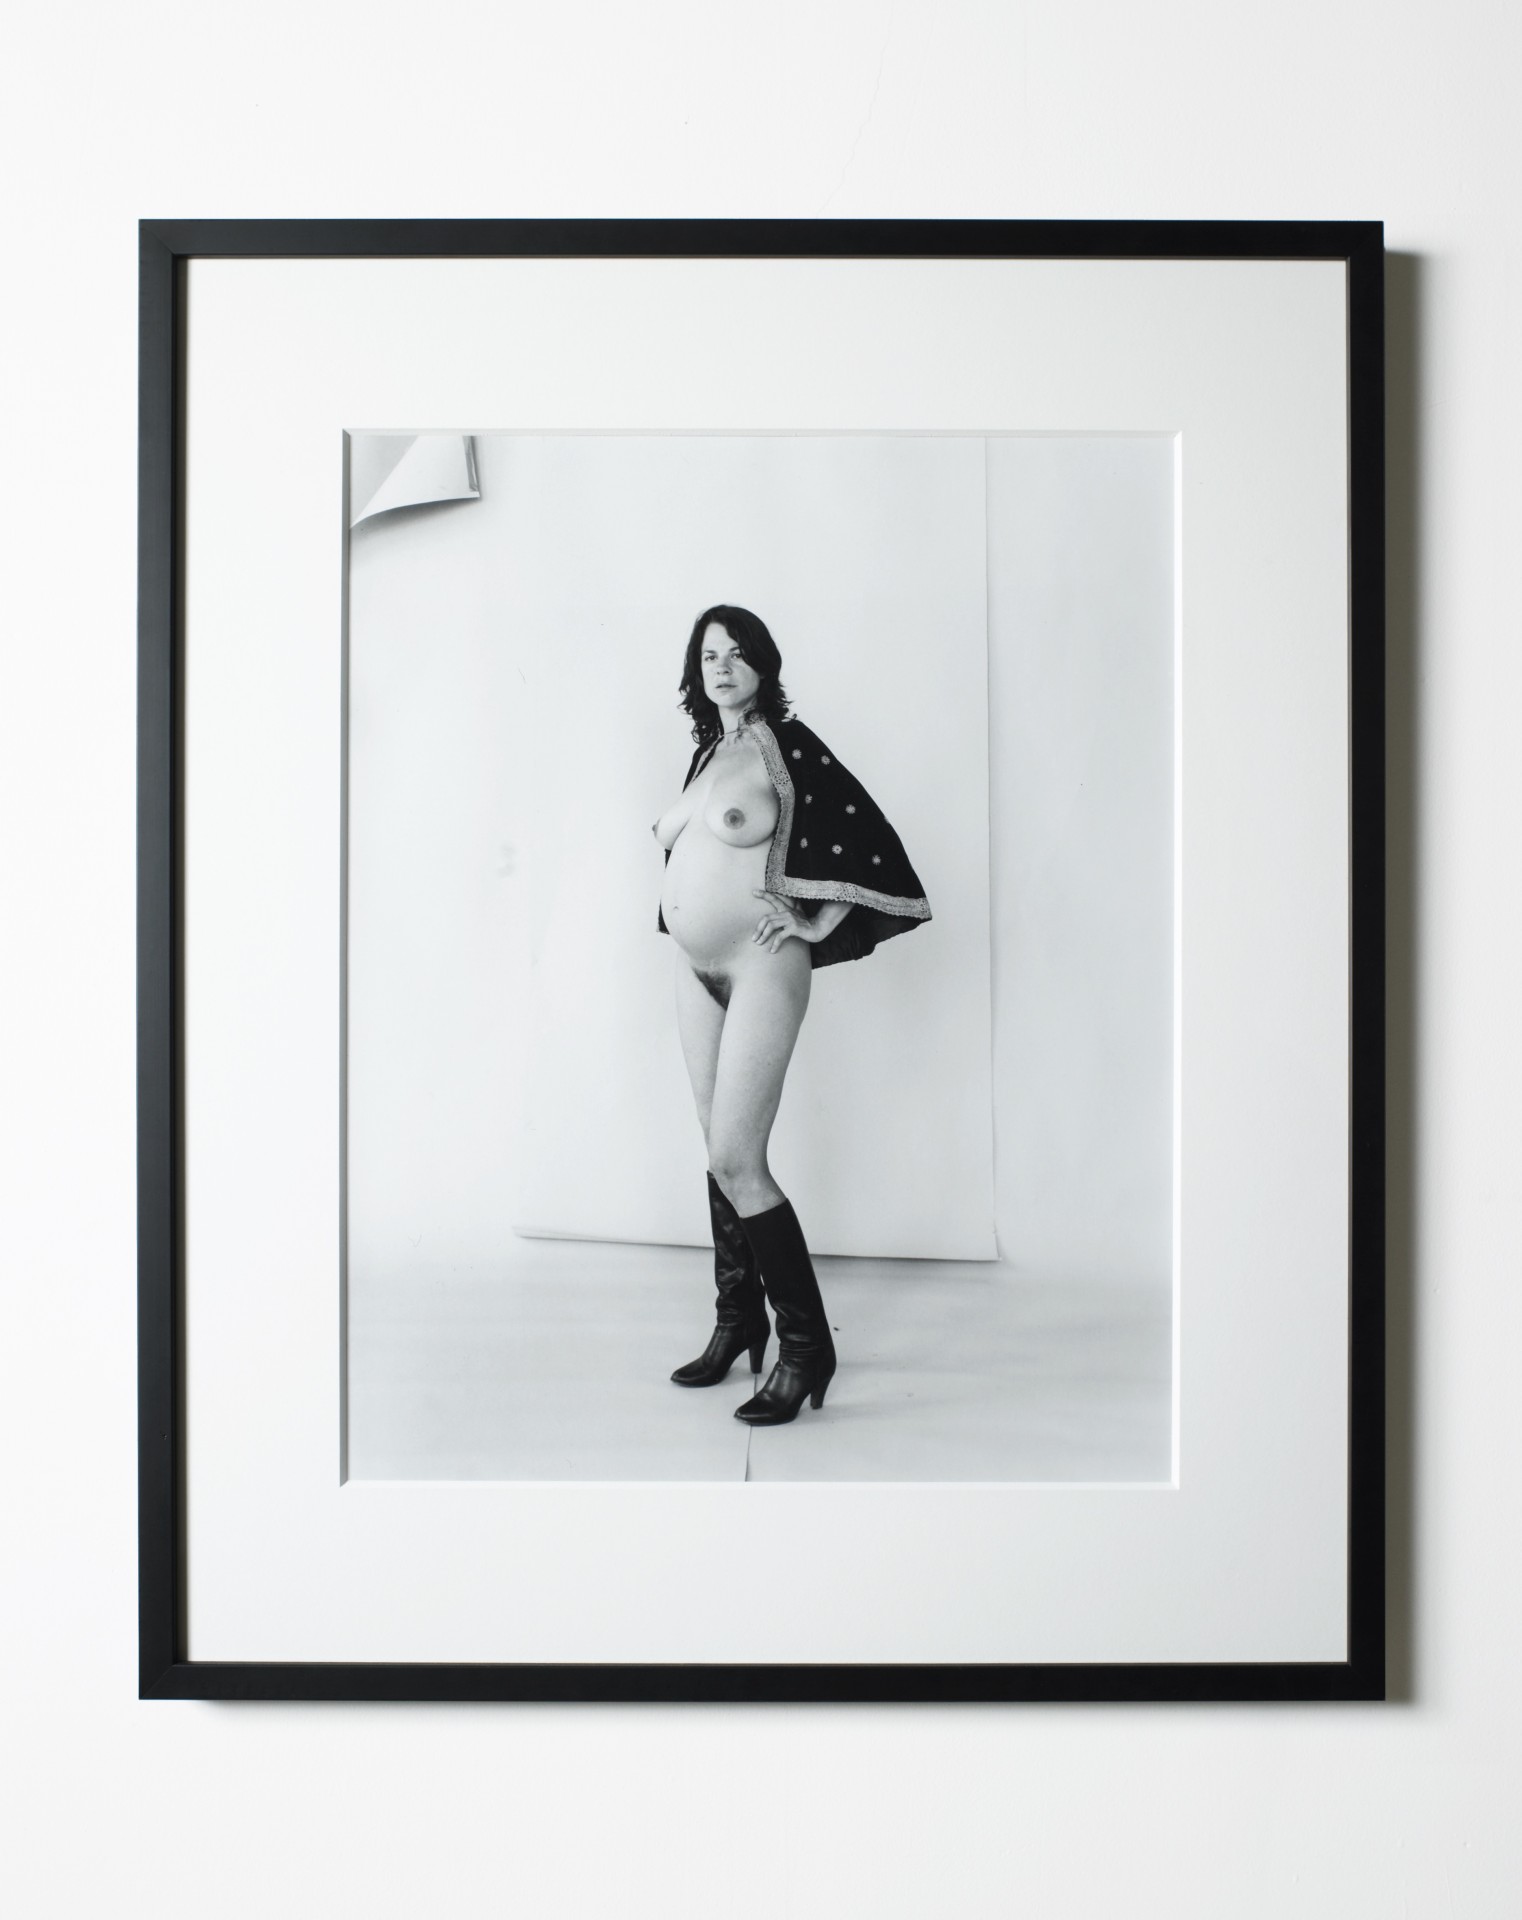 Alice O'Malley, *Justine Kurland, NYC, 2005*. Silver gelatin print